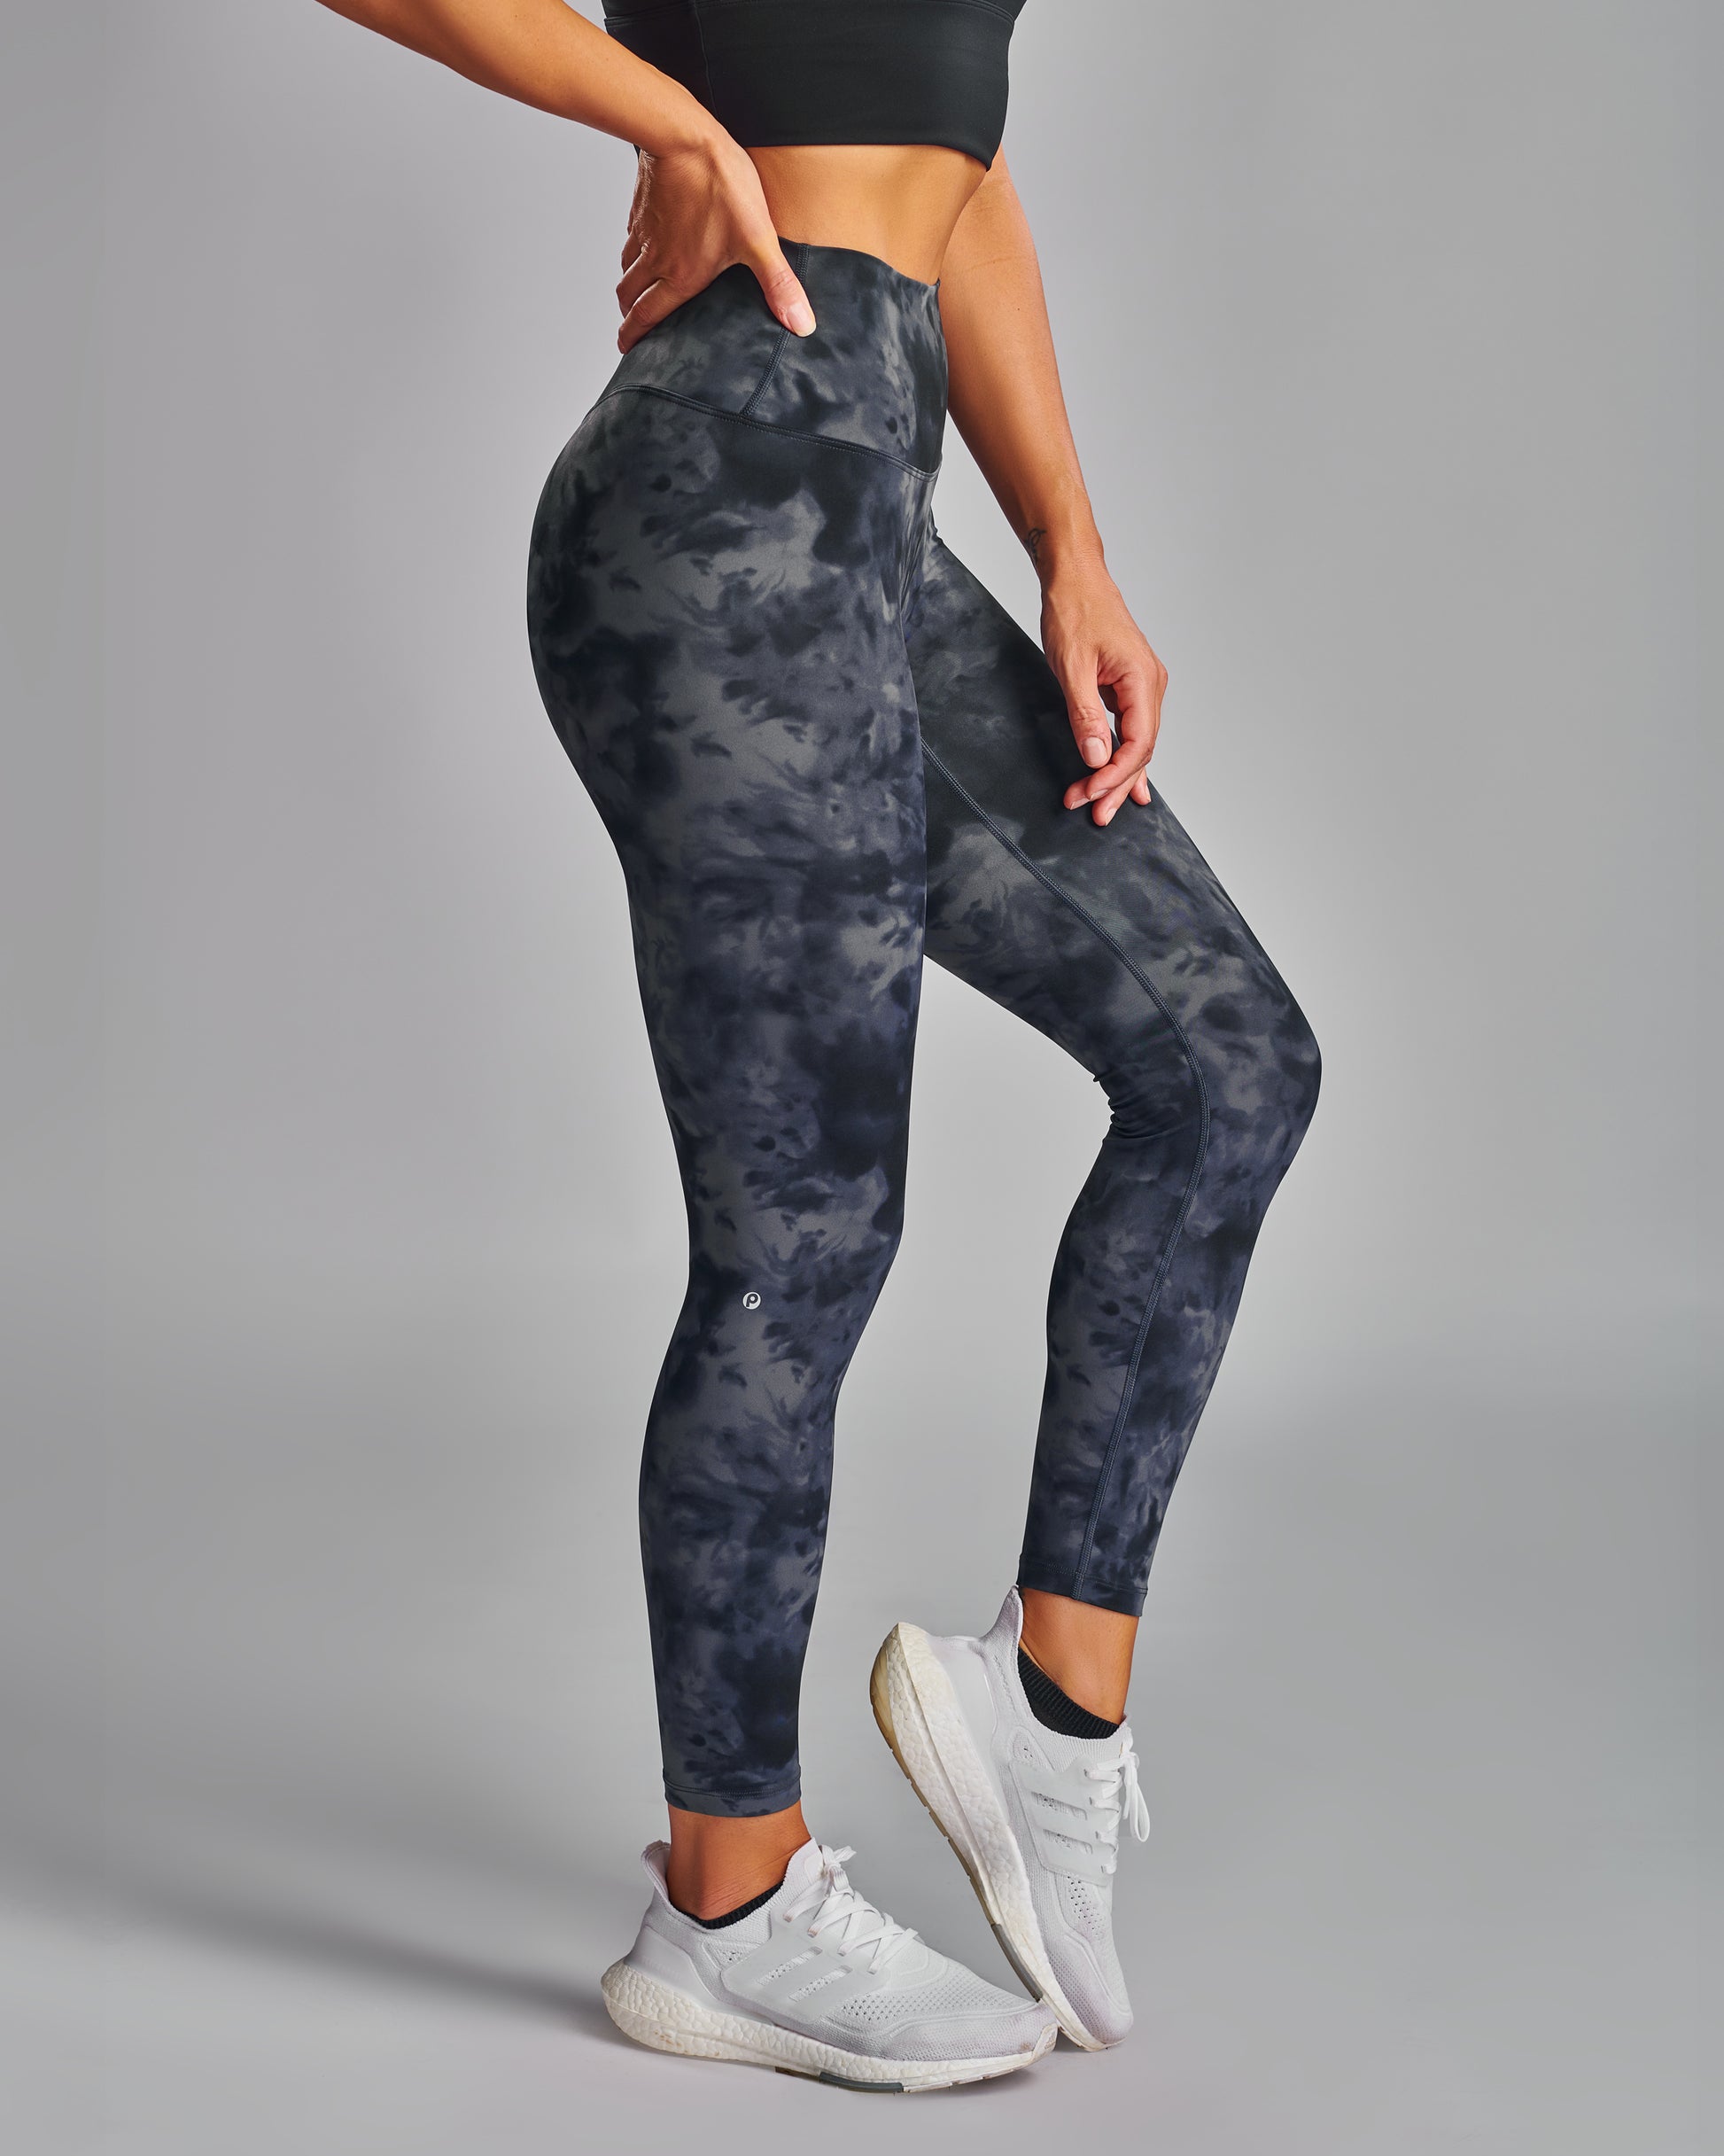 Align Leggings. Graphite Black Print Ultralux fabric. – Pineapple Athleisure